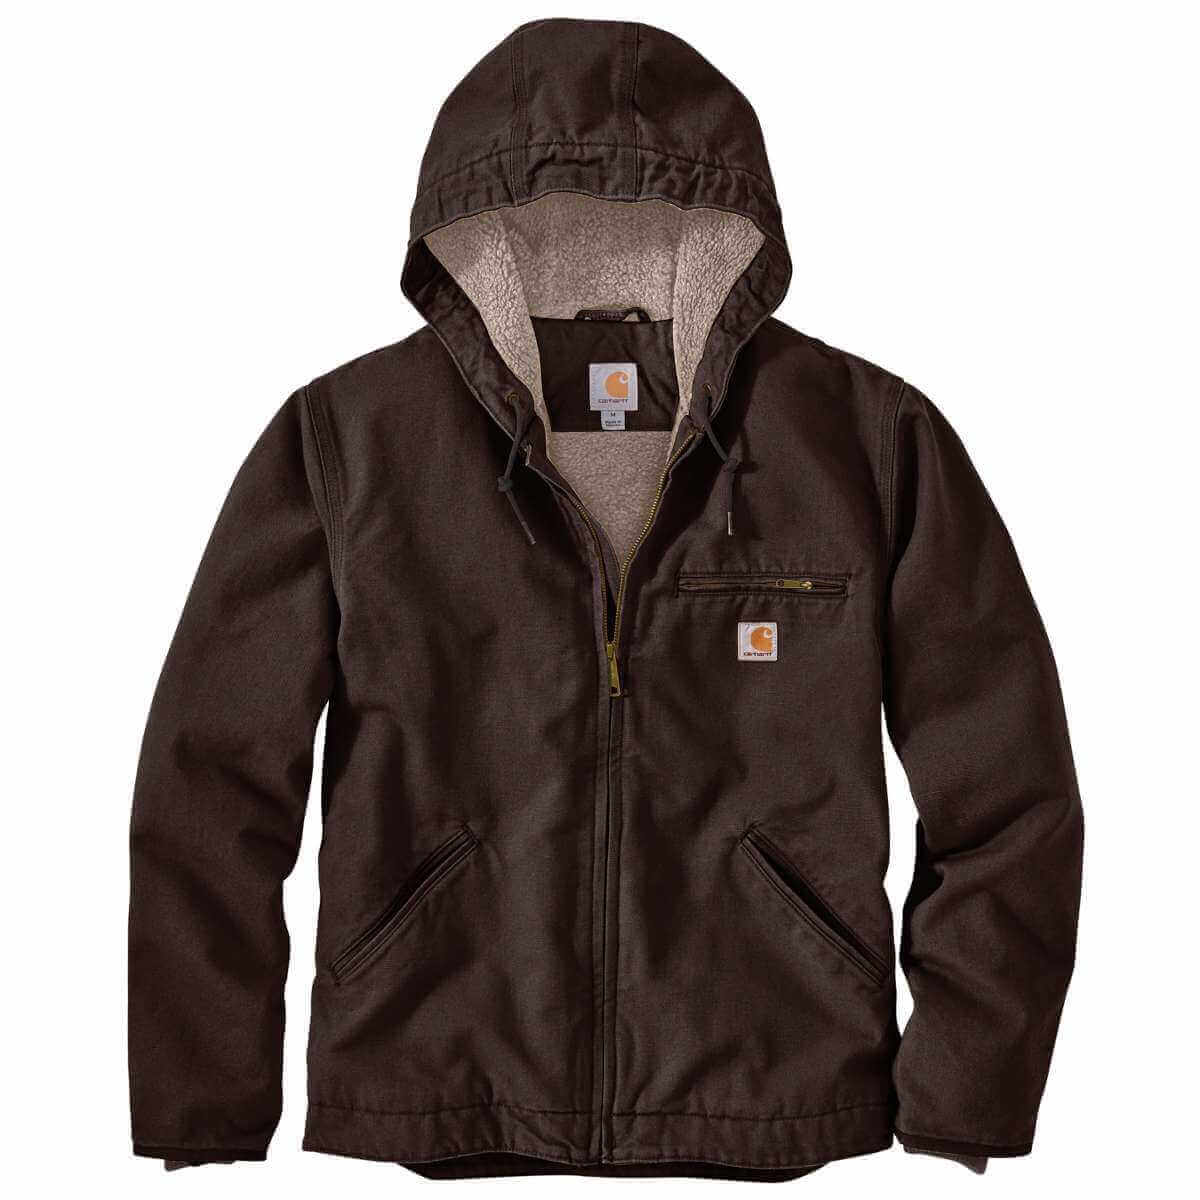 Carhartt Men's Washed Duck Sherpa Lined Jacket DKB Dark Brown